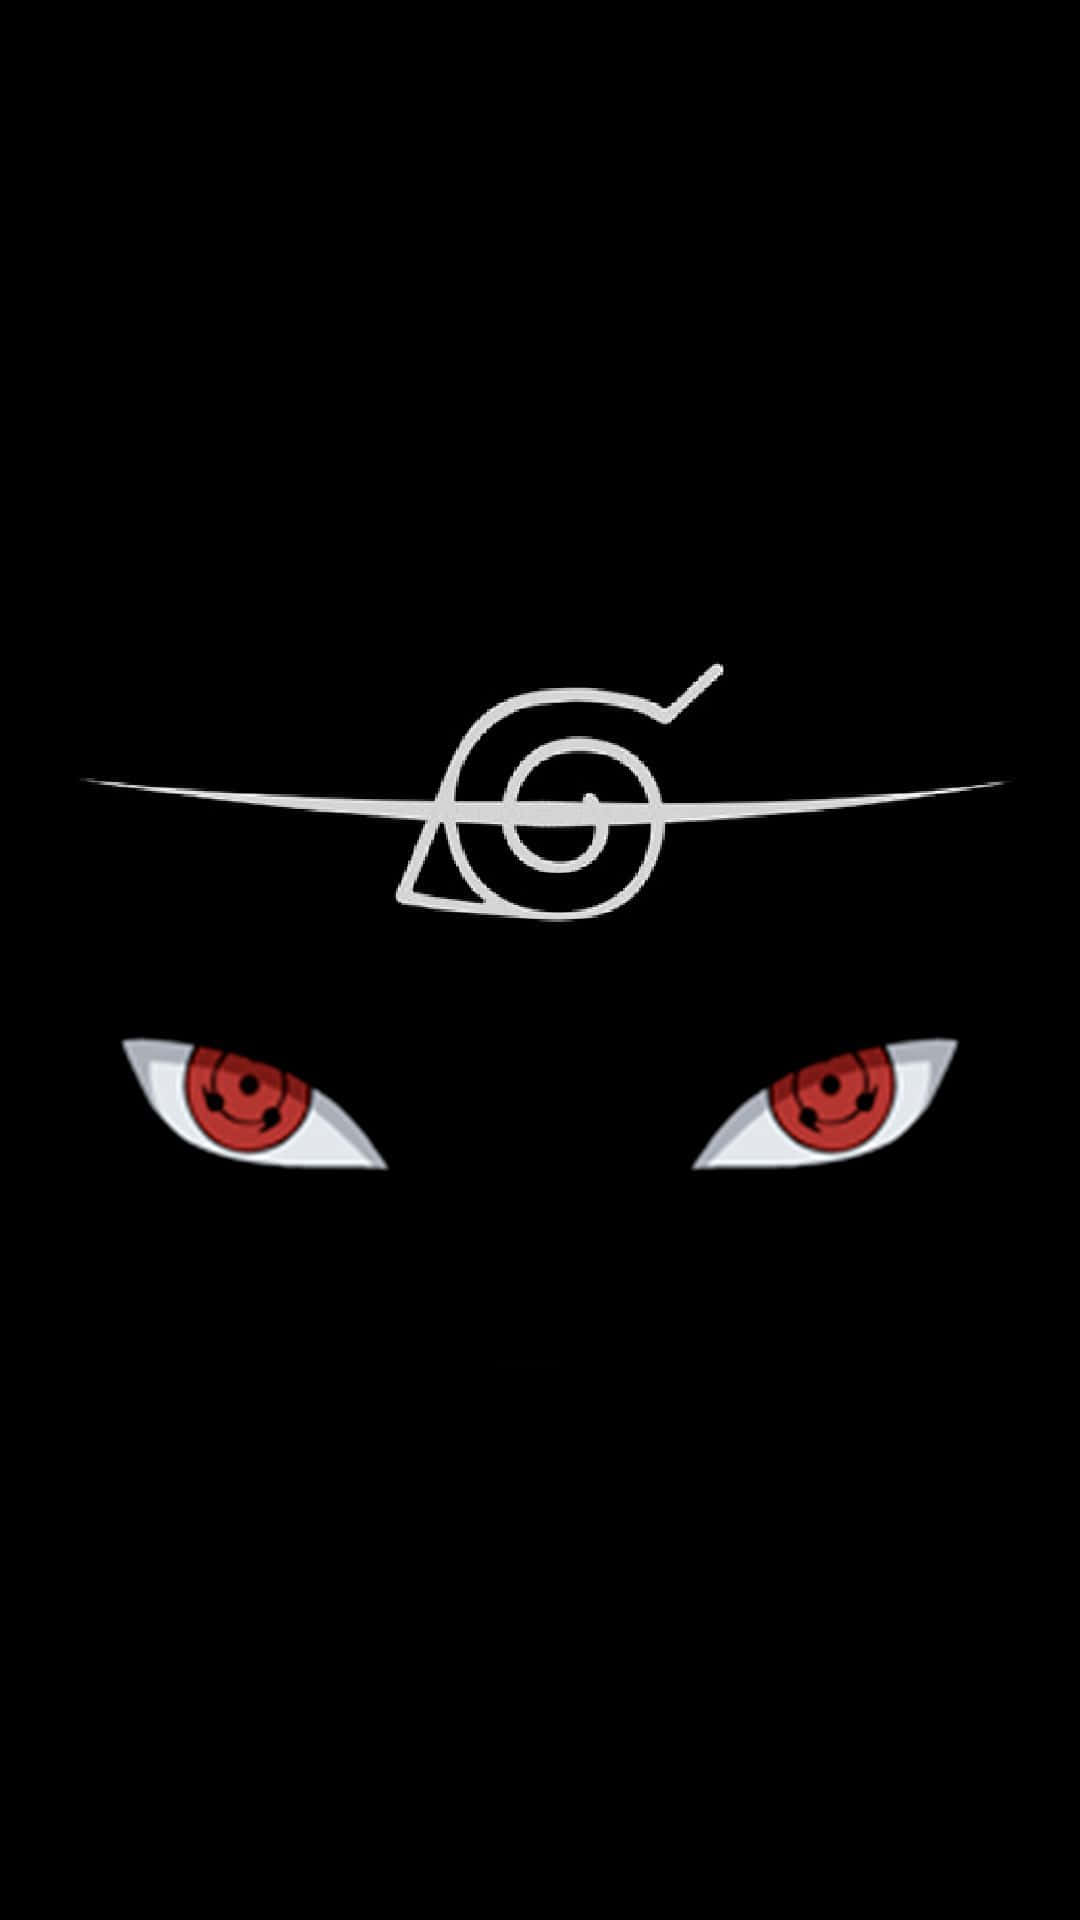 Free Naruto Black And White Wallpaper Downloads, [100+] Naruto Black And White  Wallpapers for FREE 